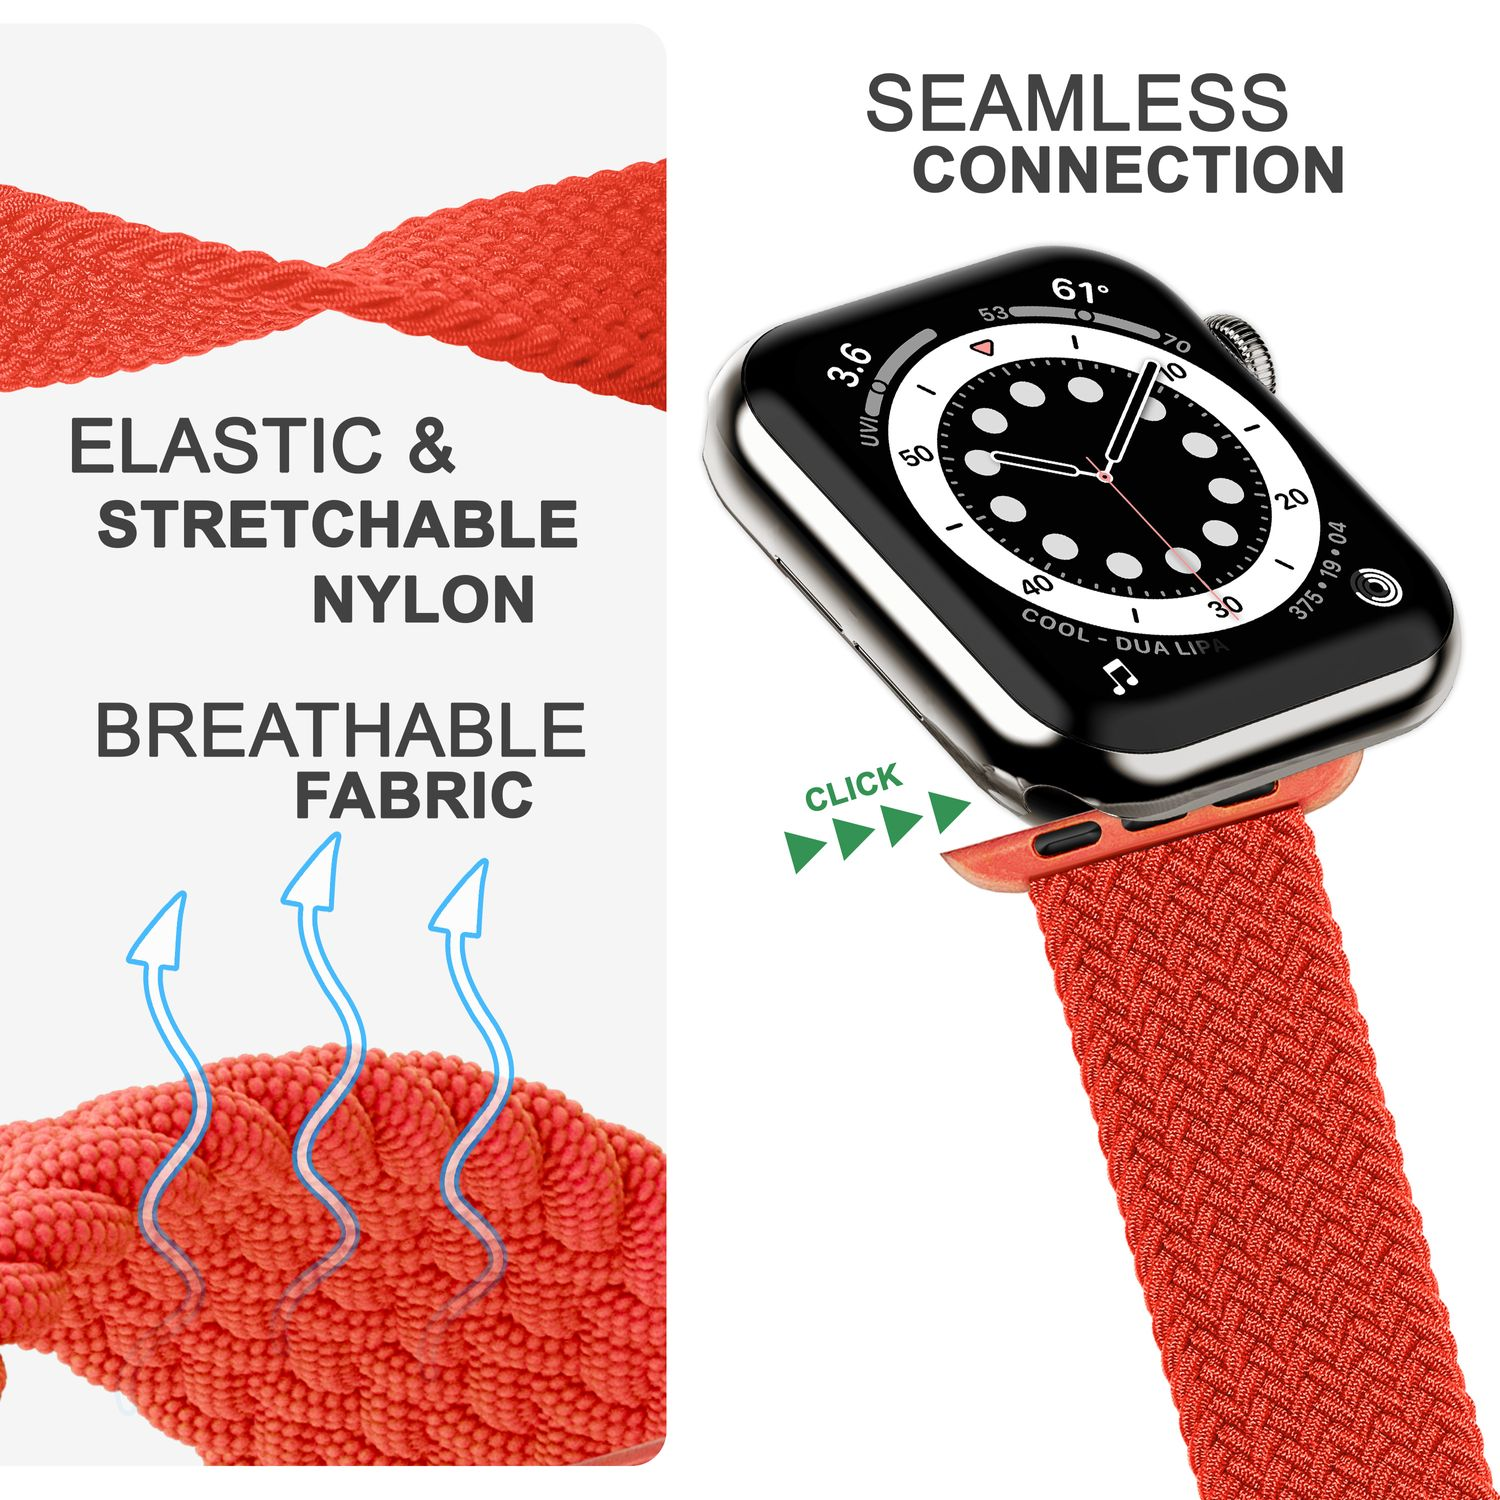 NALIA Geflochtenes Smart-Watch Armband, Ersatzarmband, 38mm/40mm/41mm, Apple Apple, Rot Pastell Watch